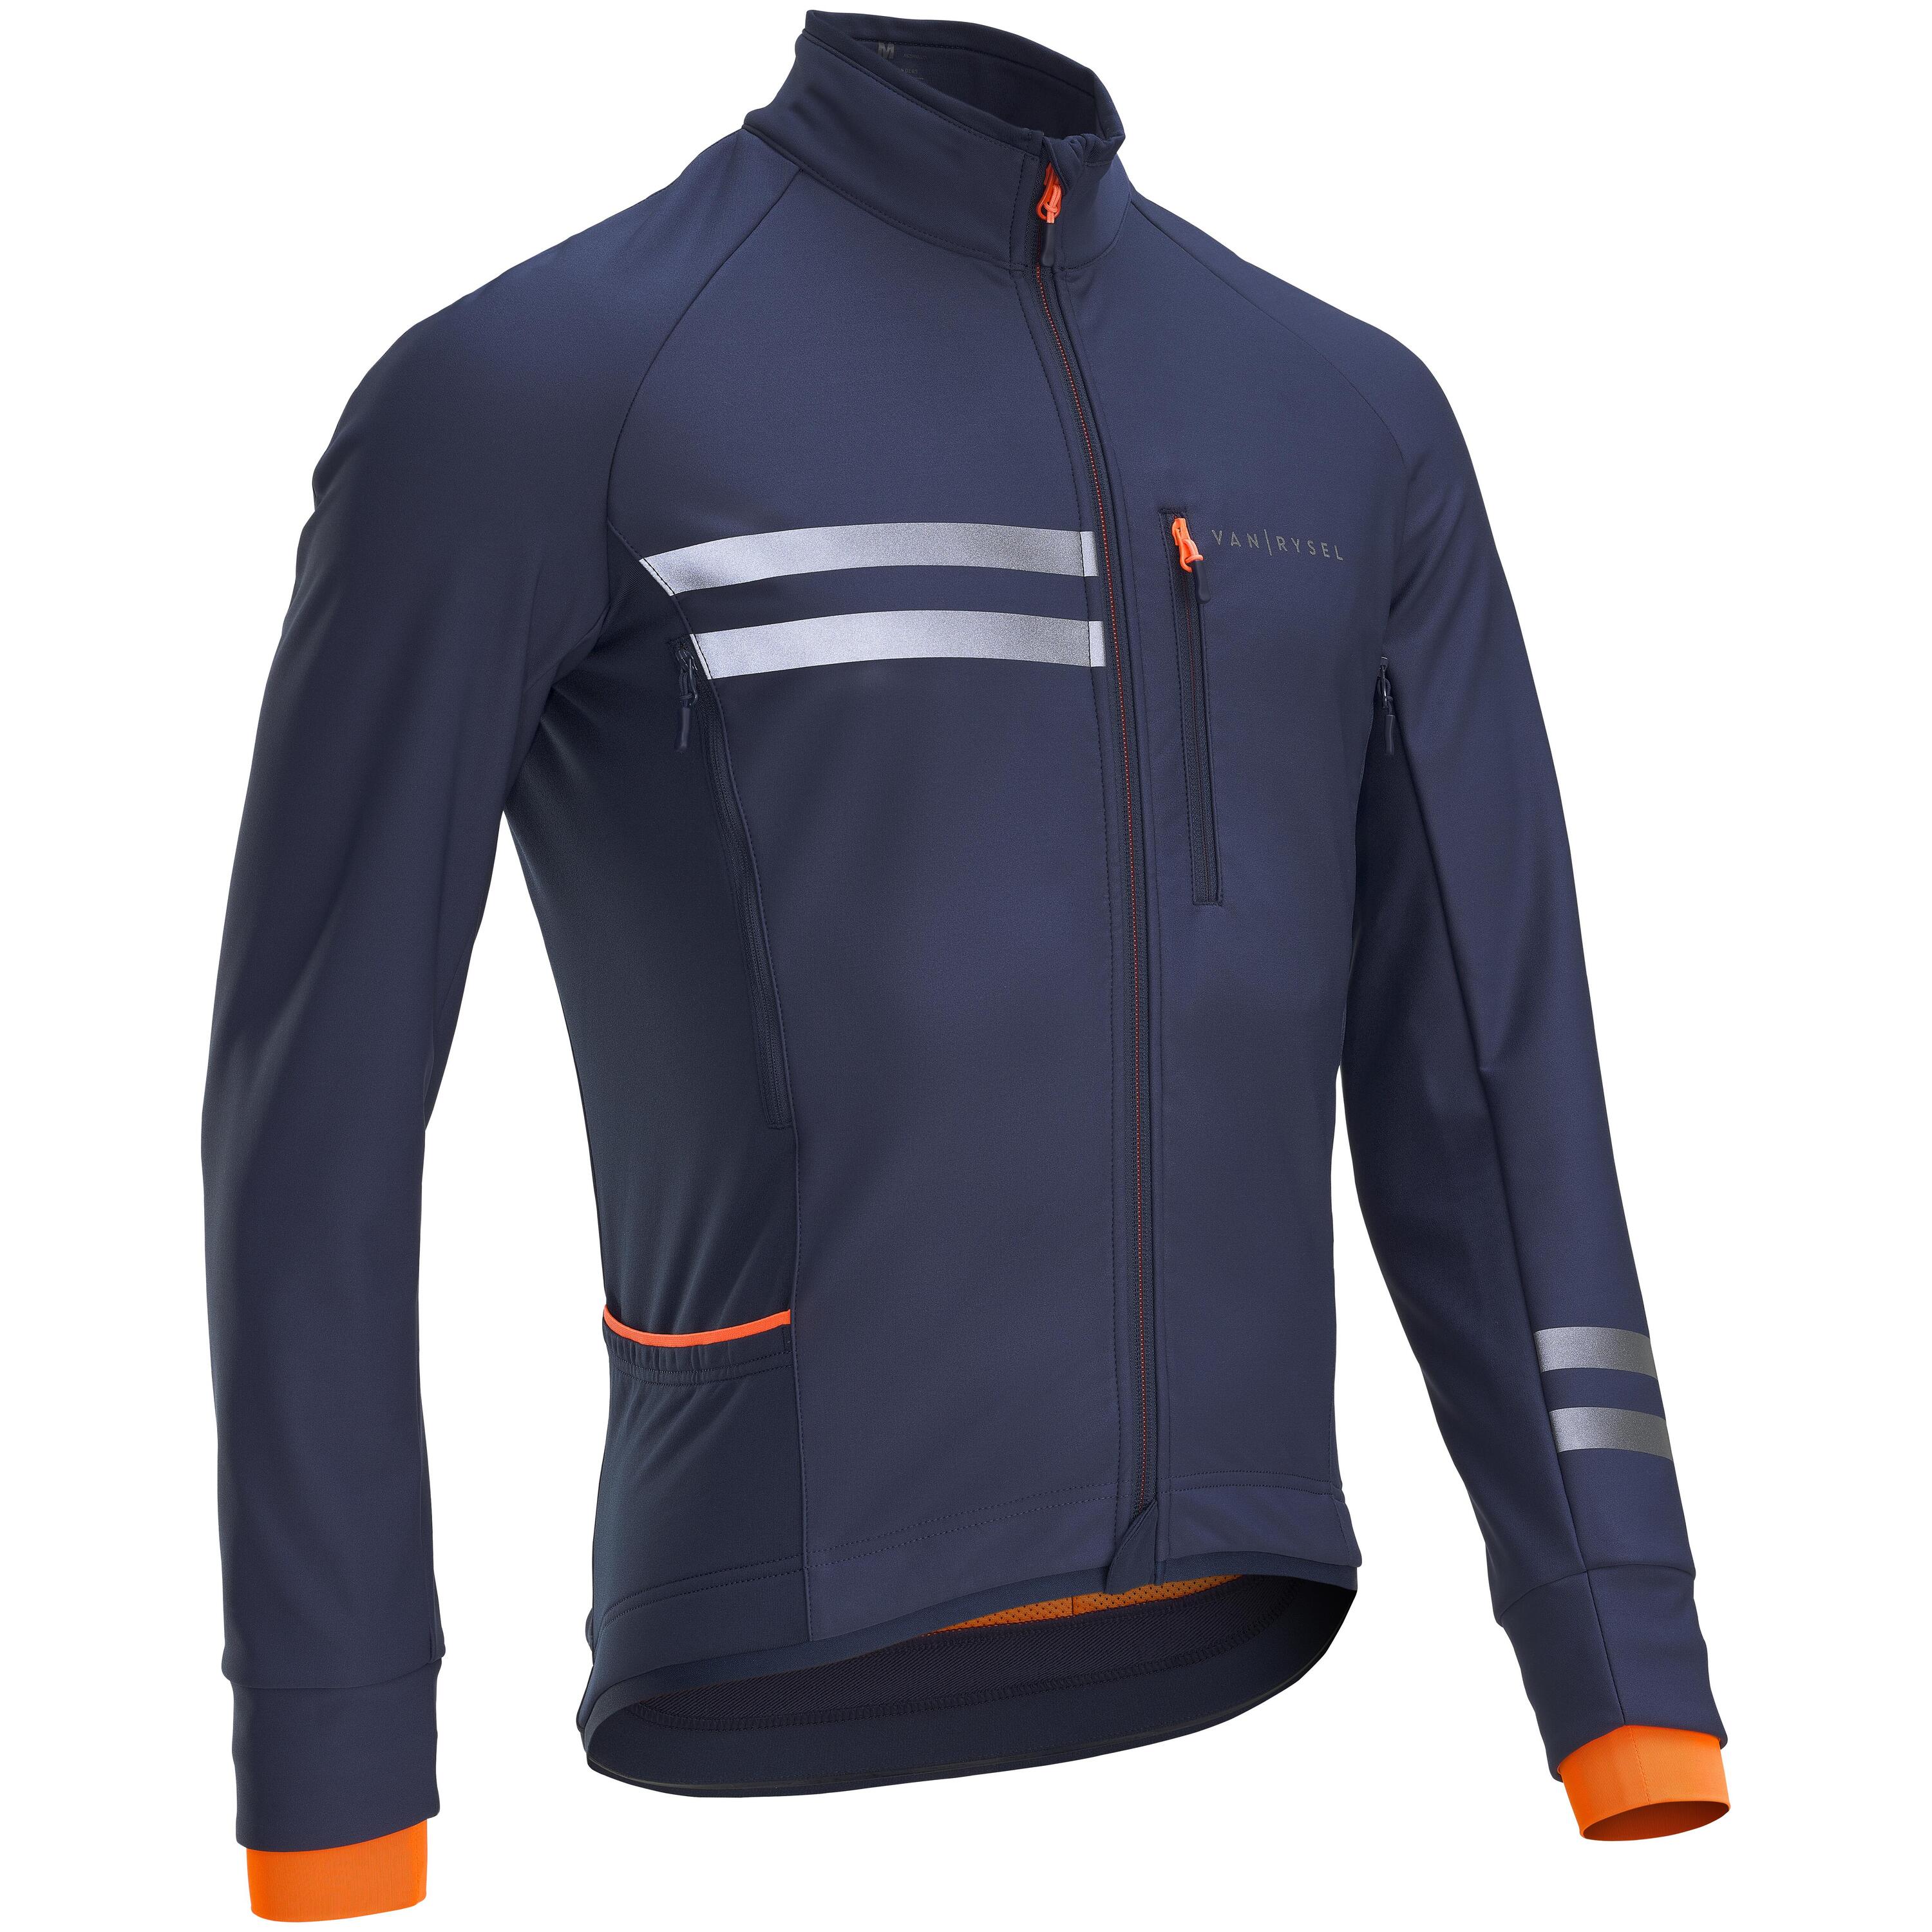 VAN RYSEL Men's Cycling Winter Jacket RC500 - Navy Blue/Orange